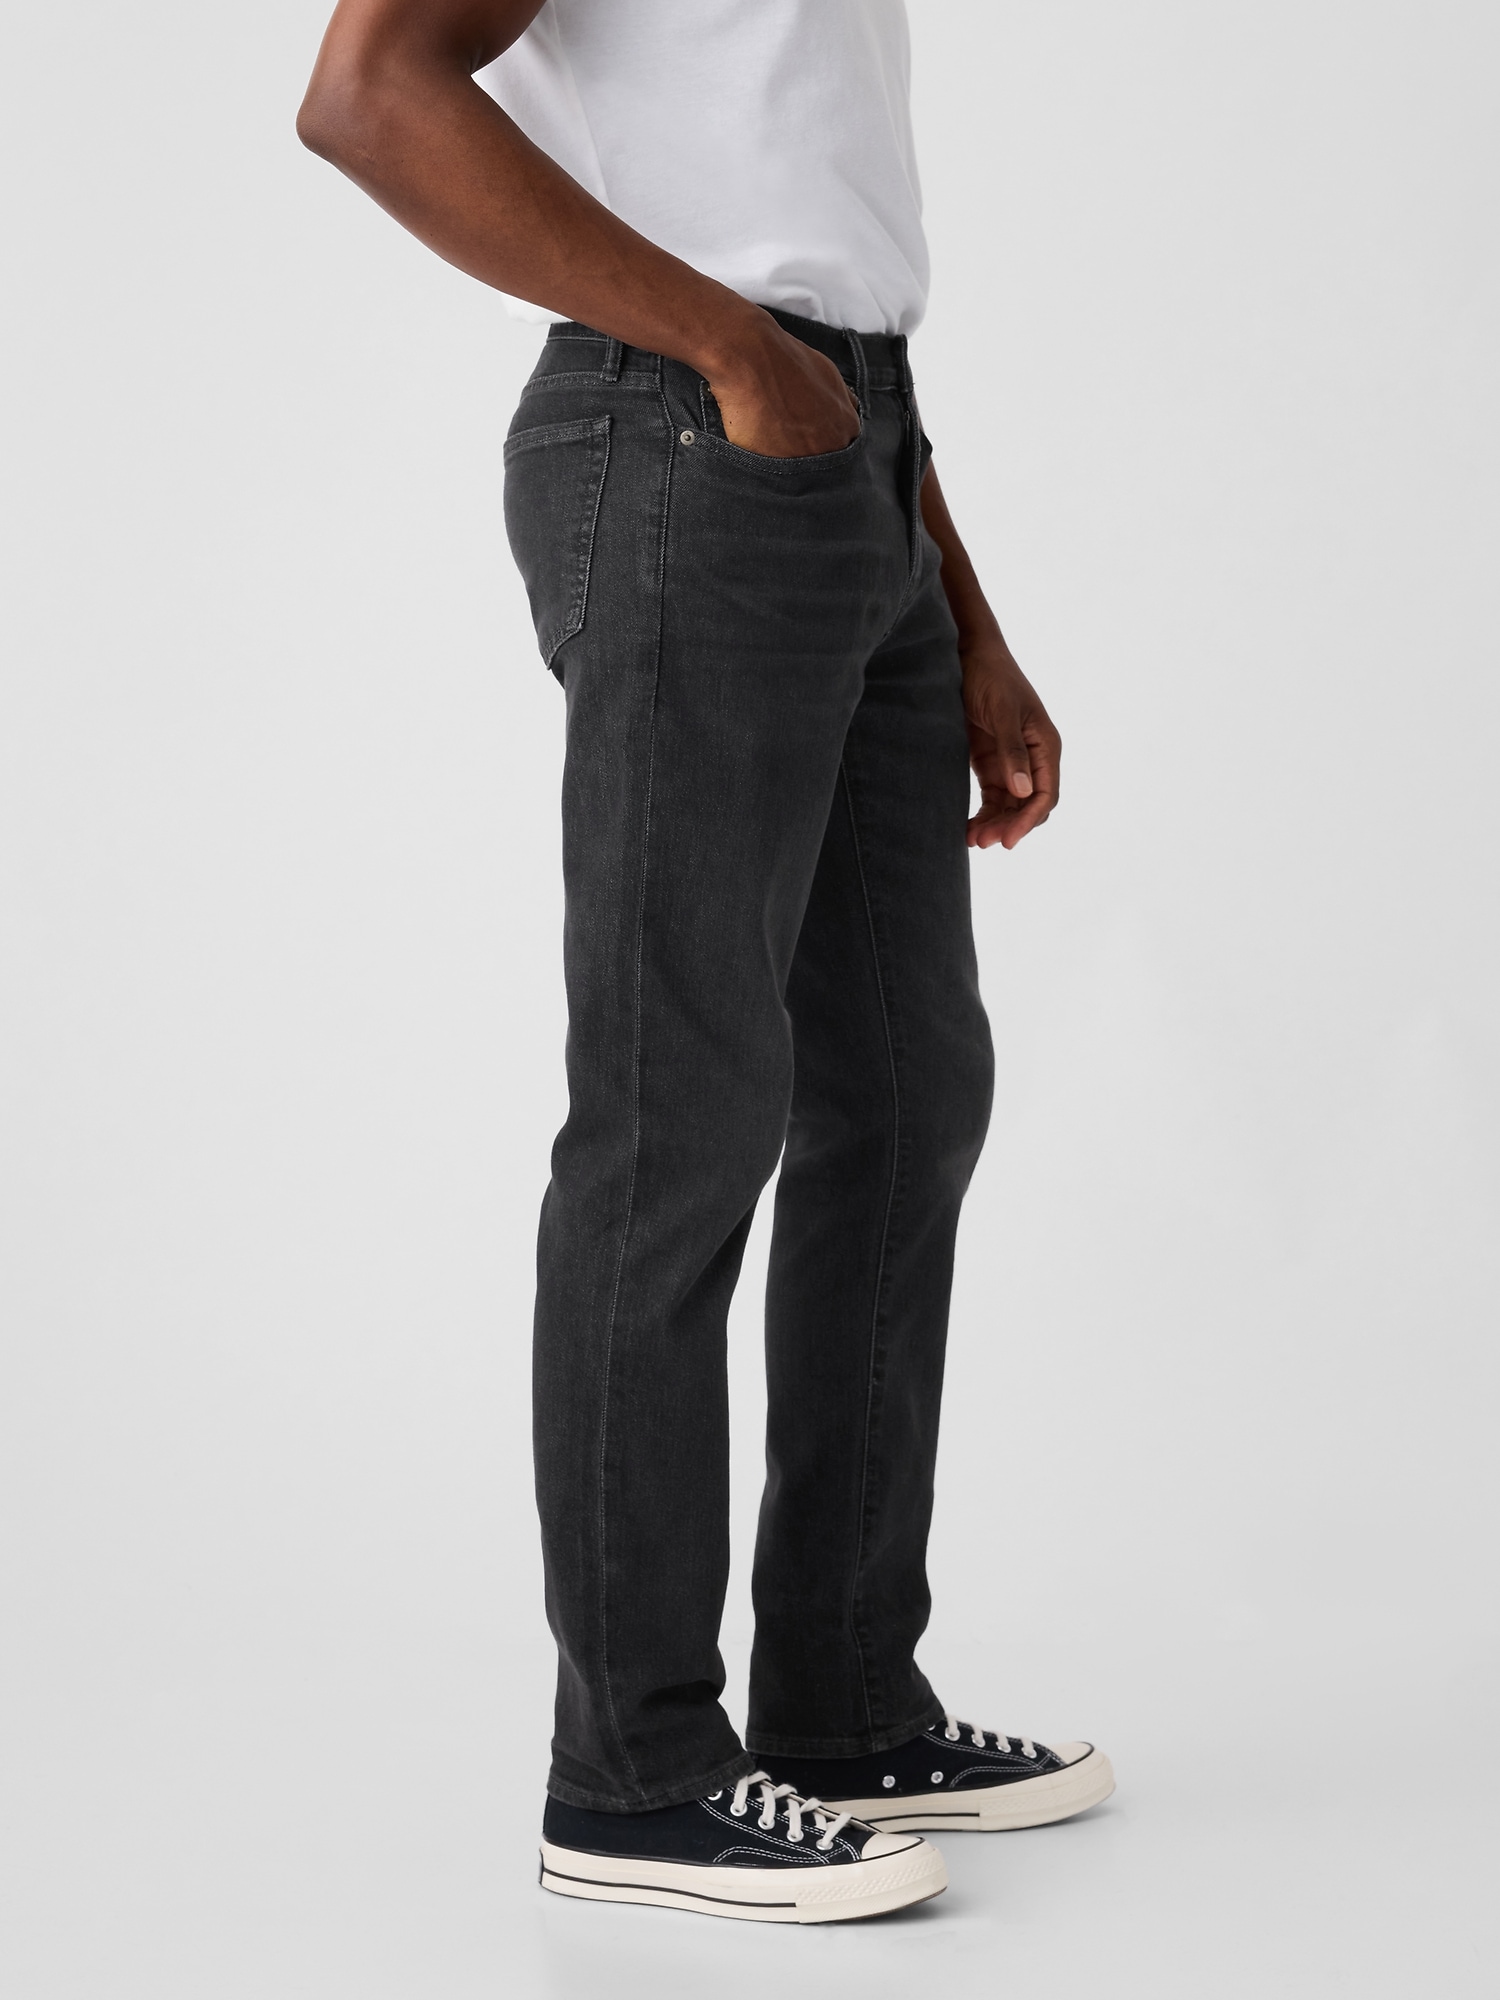 Slim GapFlex Soft Wear Jeans | Gap Factory